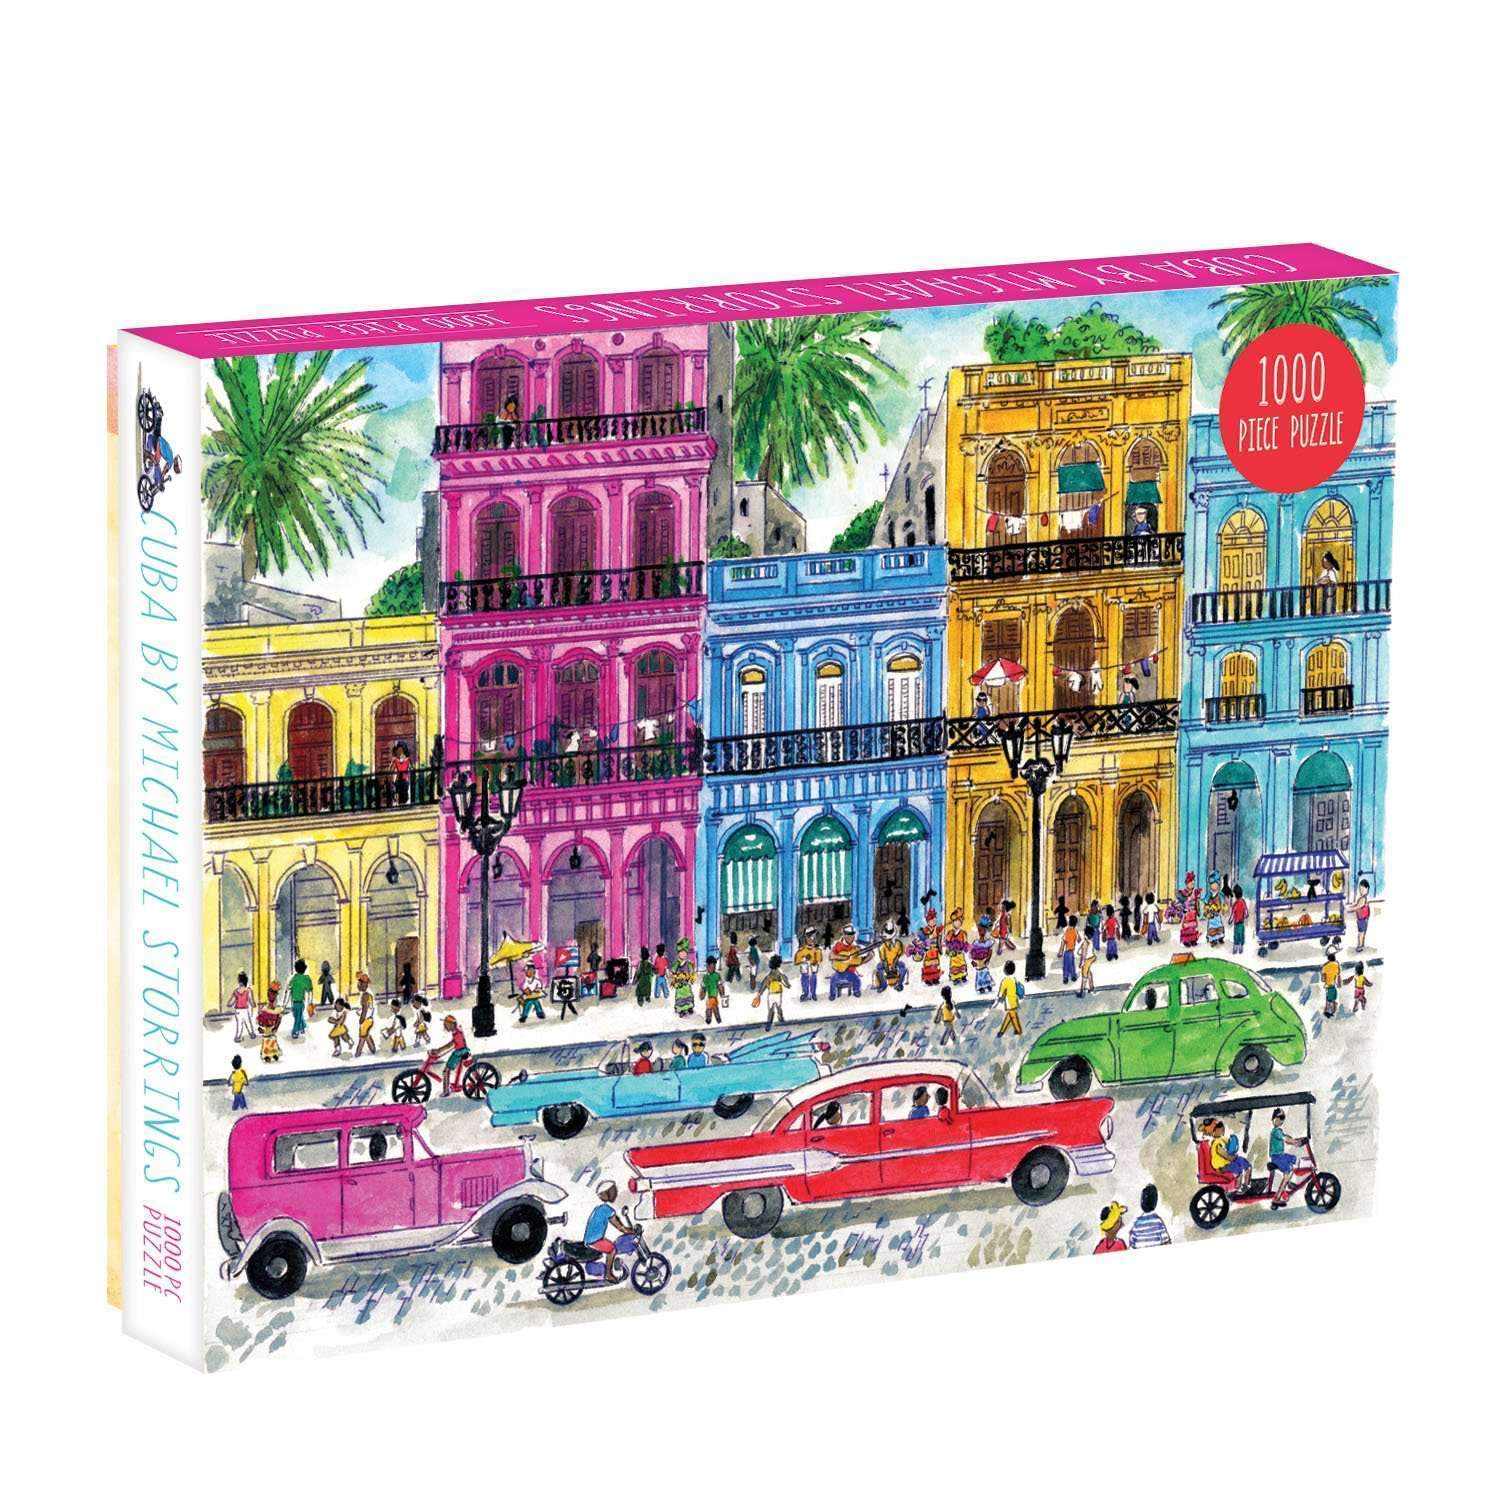 Cuba by Michael Storrings (1000 pc puzzle)